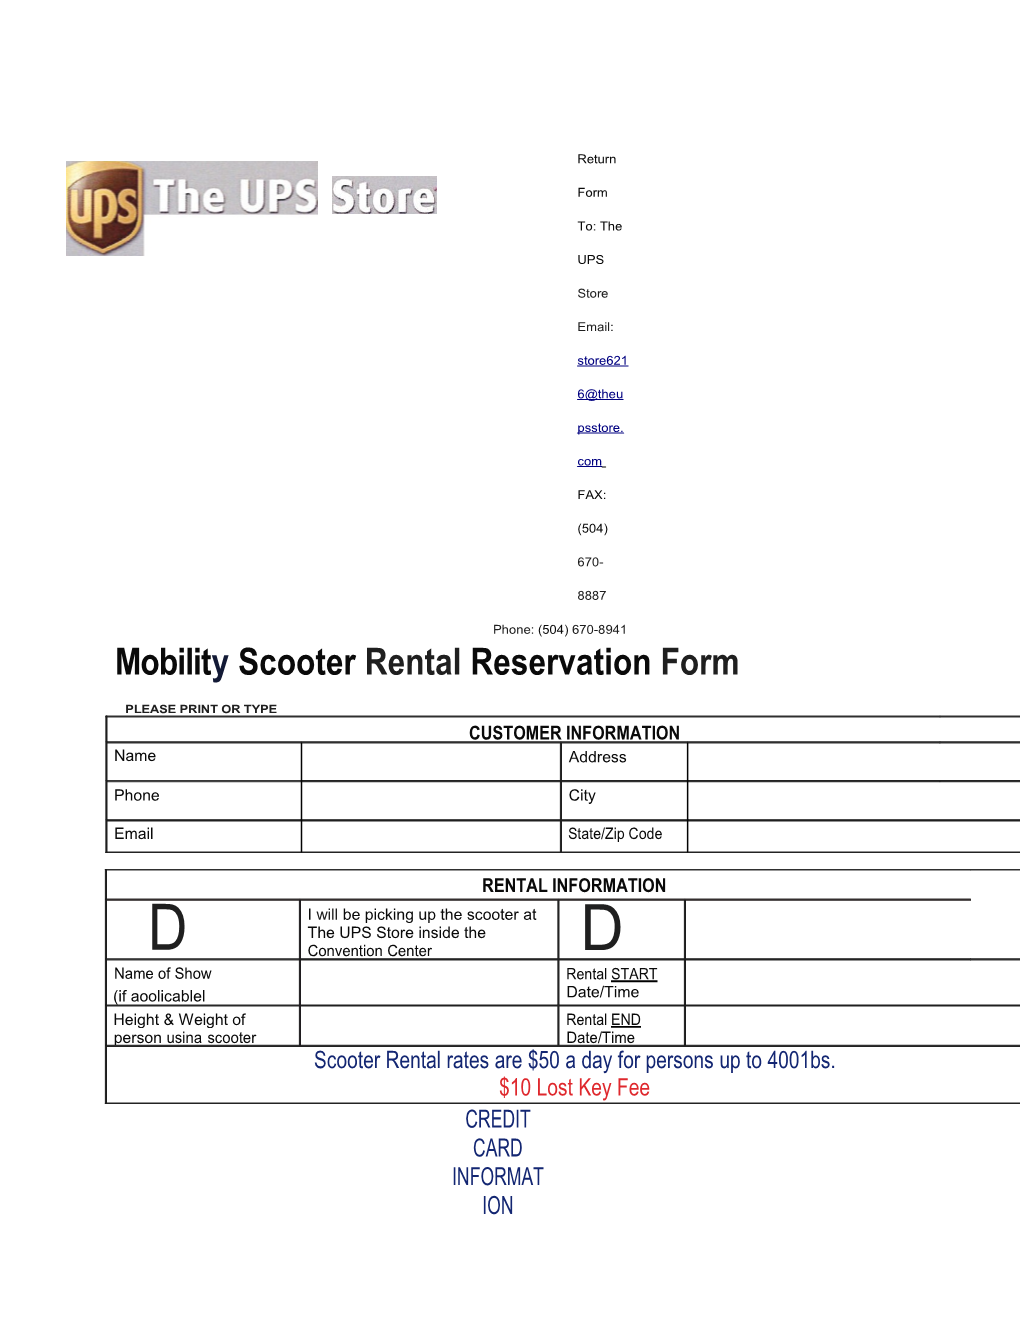 Mobilityscooterrentalreservation Form